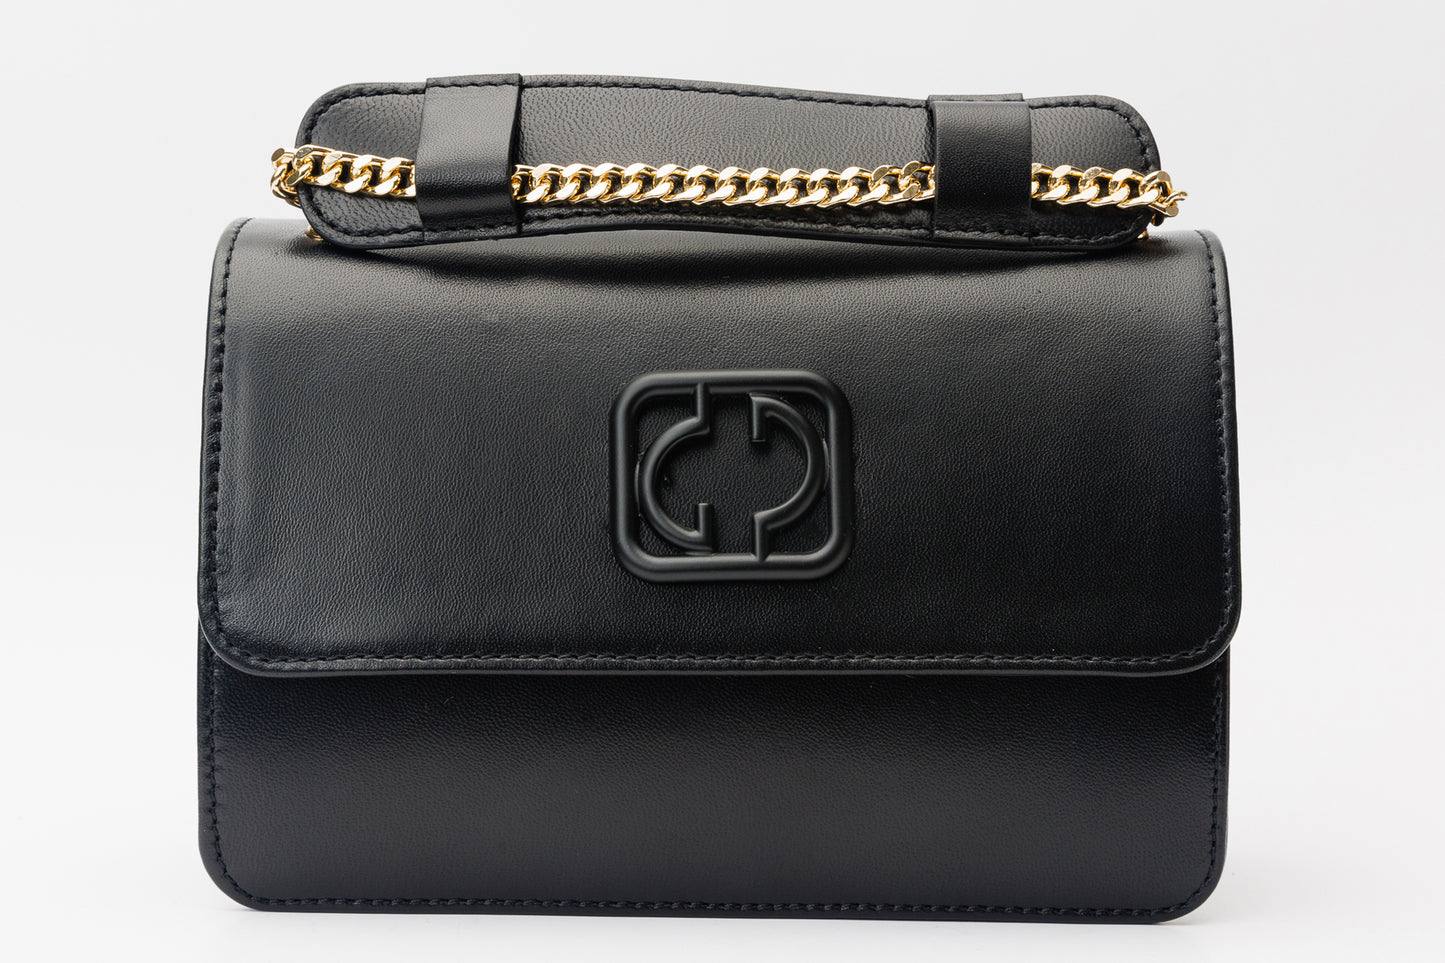 The Maneadero Black Leather Handbag